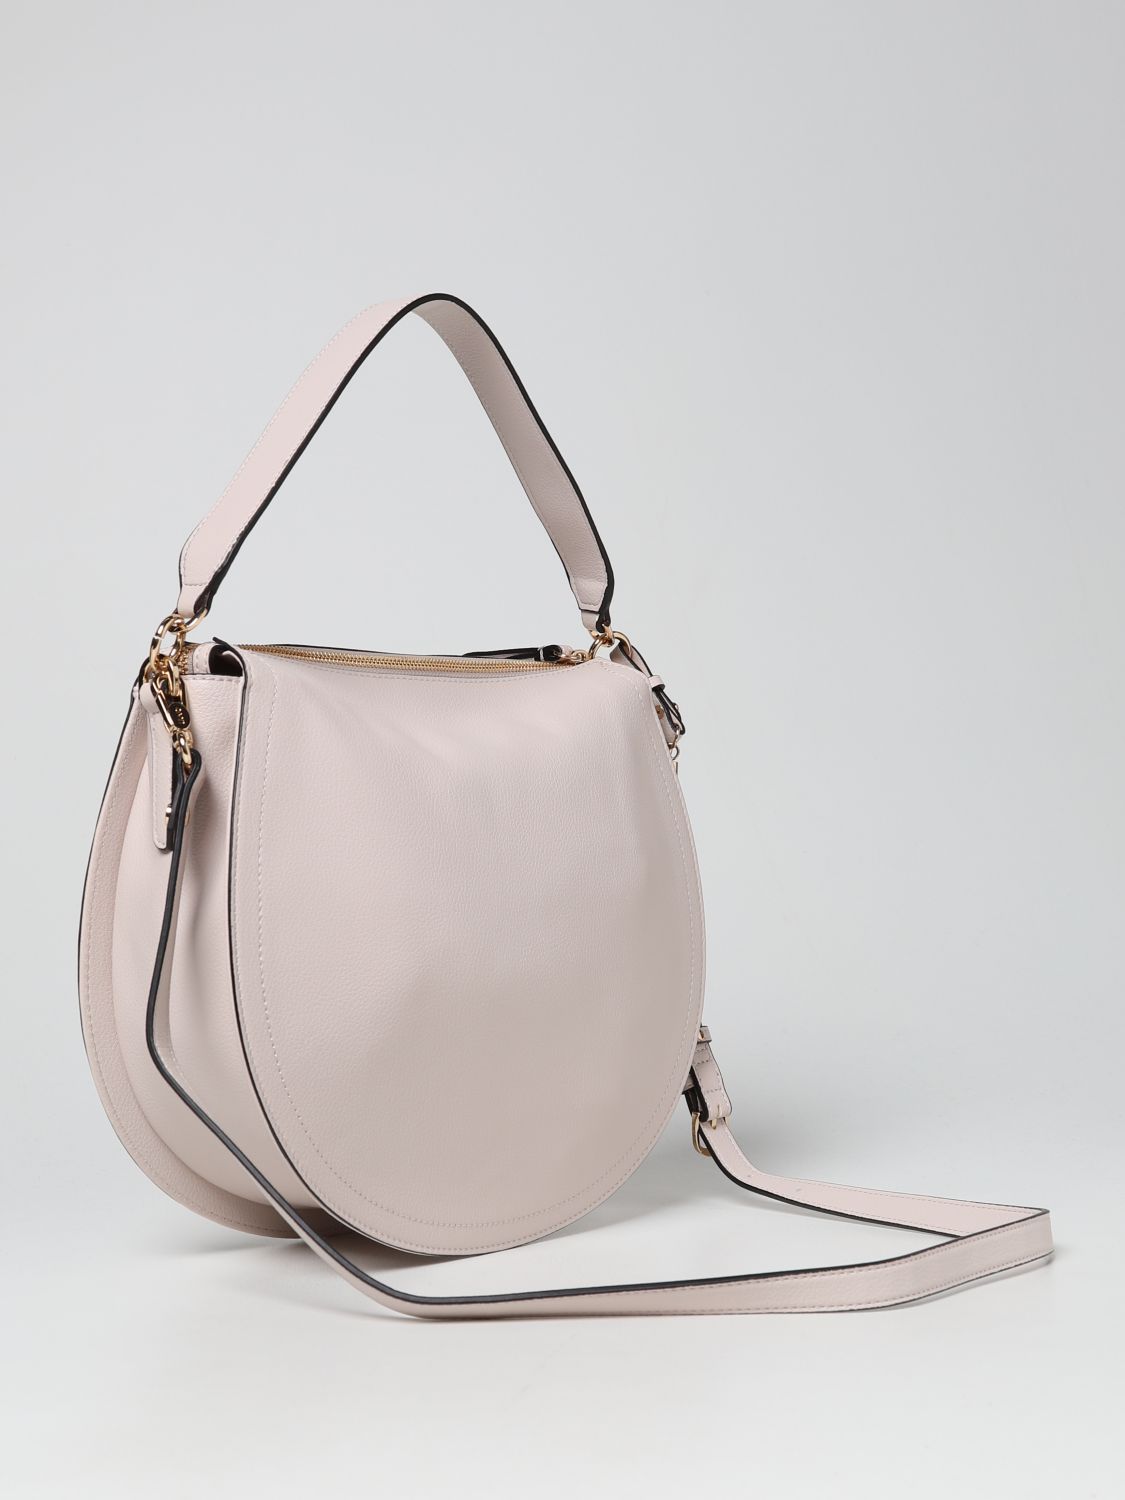 New Women’s Synthetic Leather Snake Strap Slouch Shoulder Bag Handbag